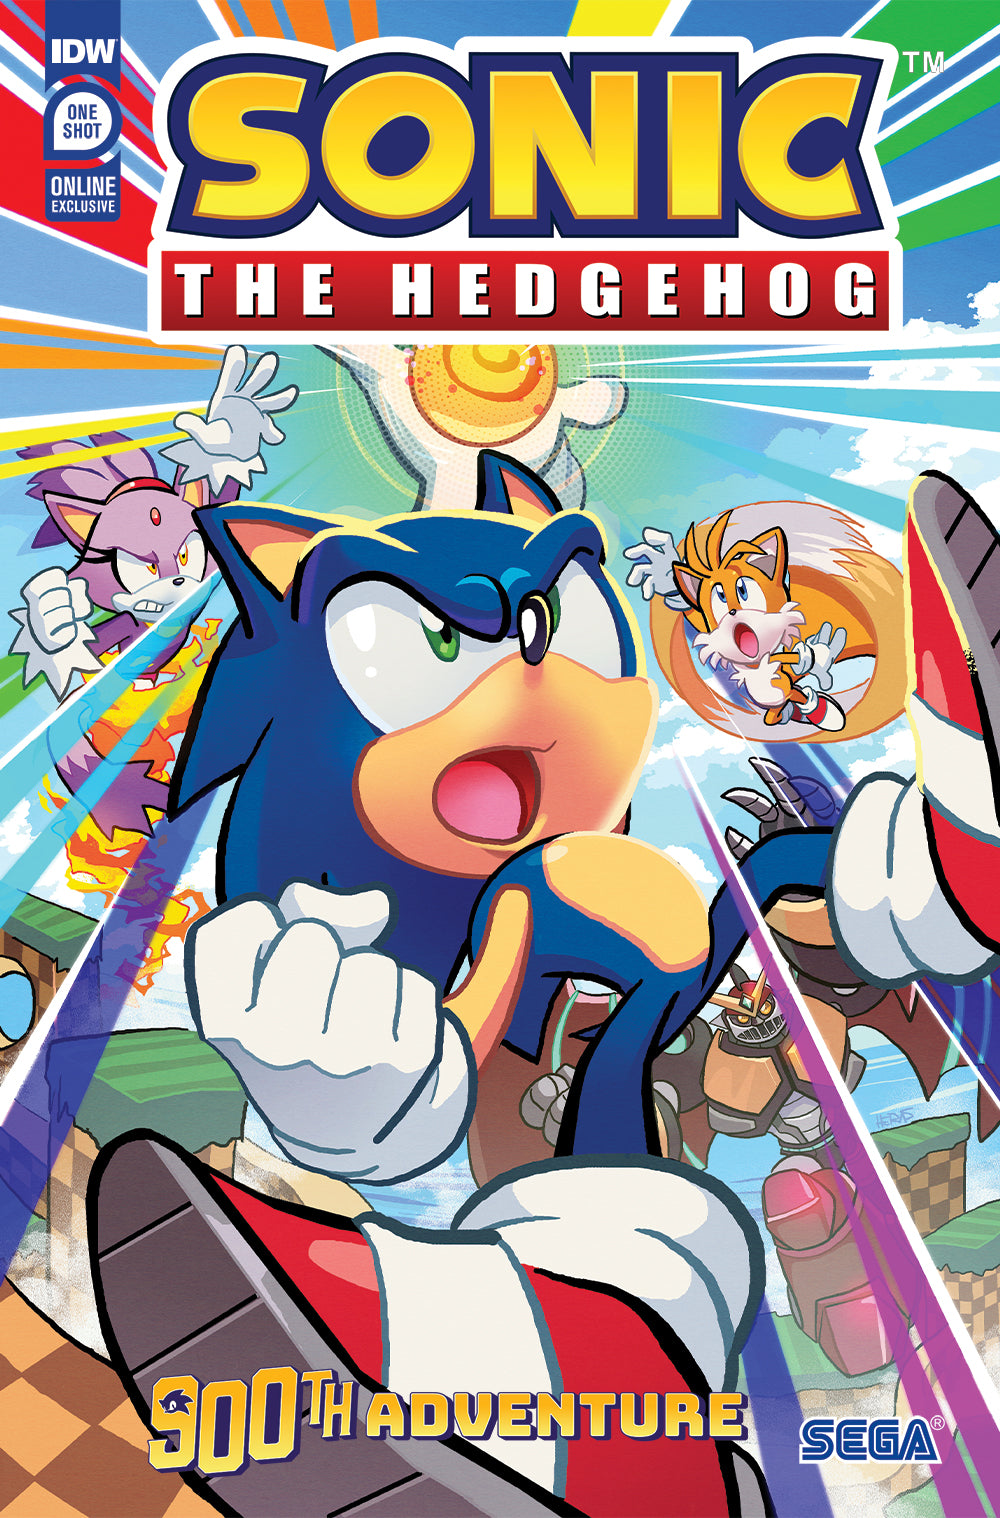 Sonic the Hedgehog’s 900th Adventure - 2023 Online Exclusive